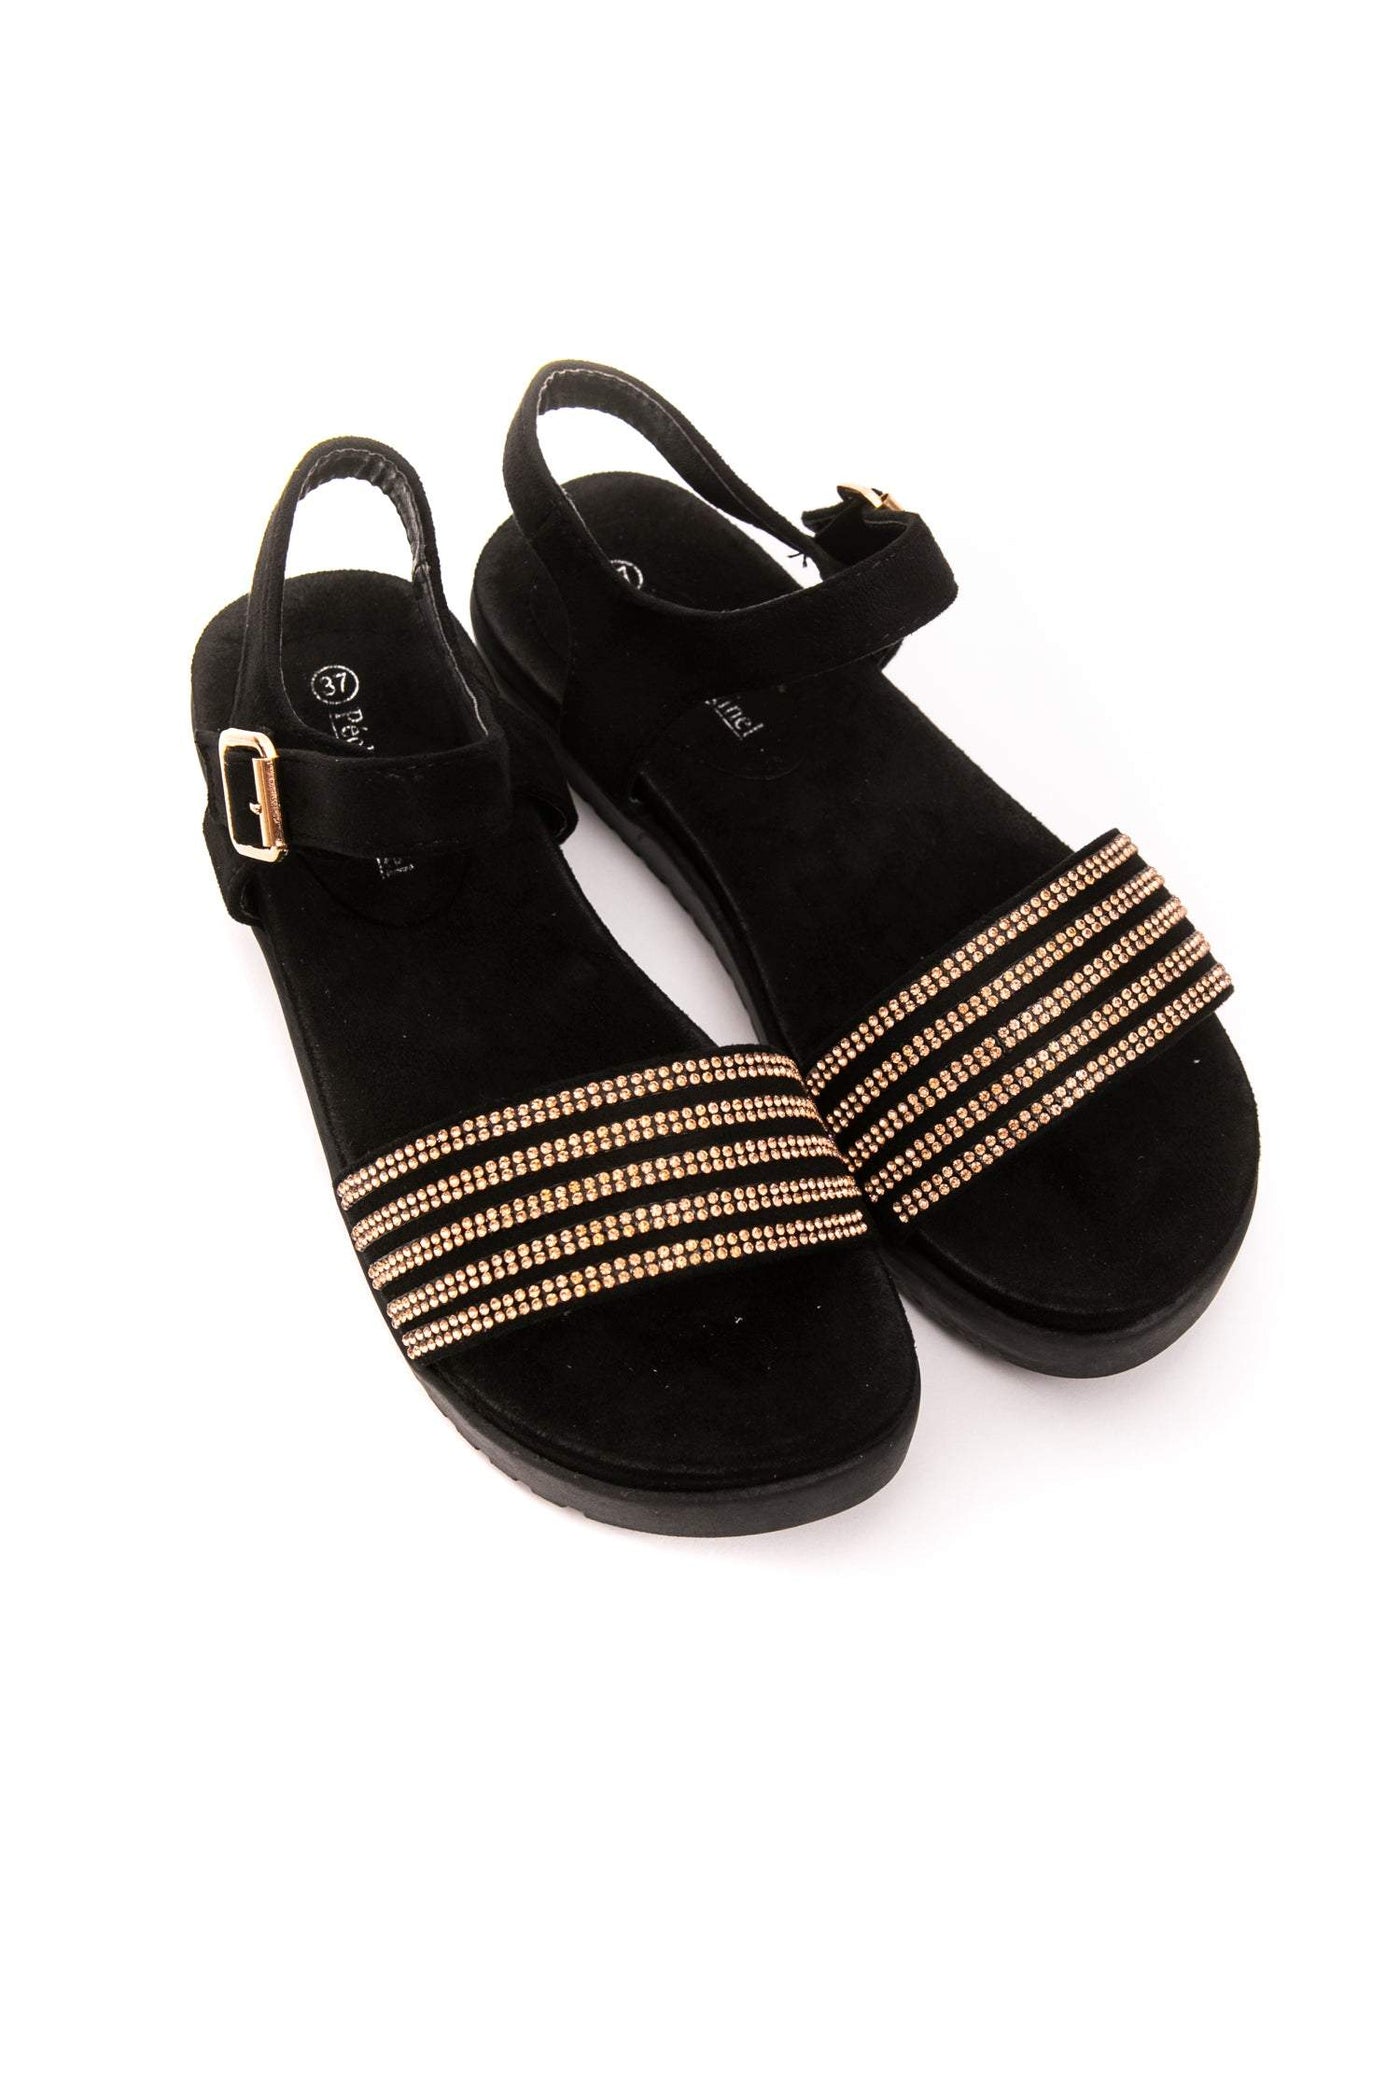 Péché Originel Gold Sandal EU35/US4.5, EU36/US5.5, EU37/US6.5, EU38/US7.5, EU39/US6, EU40/US7, feed-1, Gold, Péché Originel, Sandals - Women - Shoes at SEYMAYKA